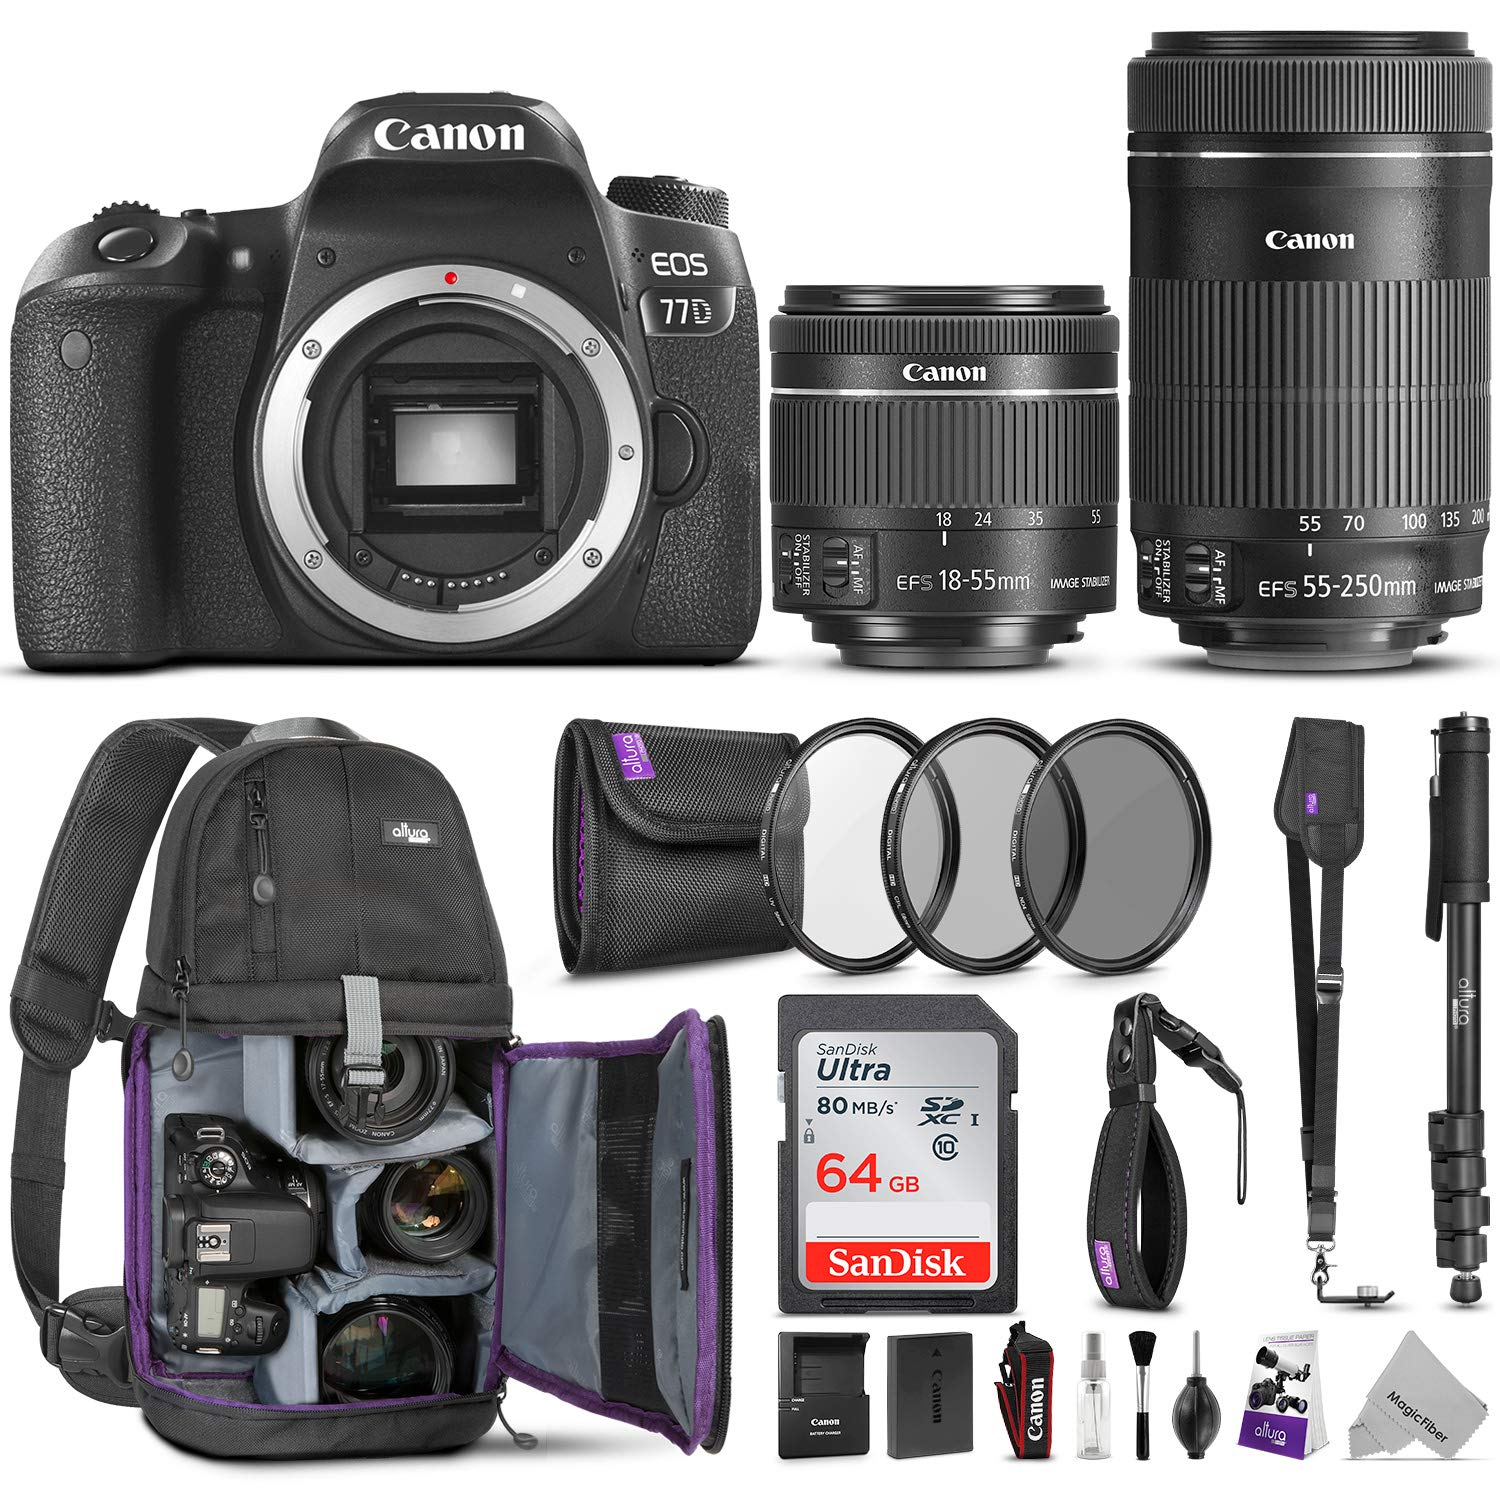 Canon EOS 77D Digital SLR Camera with EF-S 18-55mm IS STM and EF-S 55-250mm IS STM Lens (Black) 19PC Professional Bundle